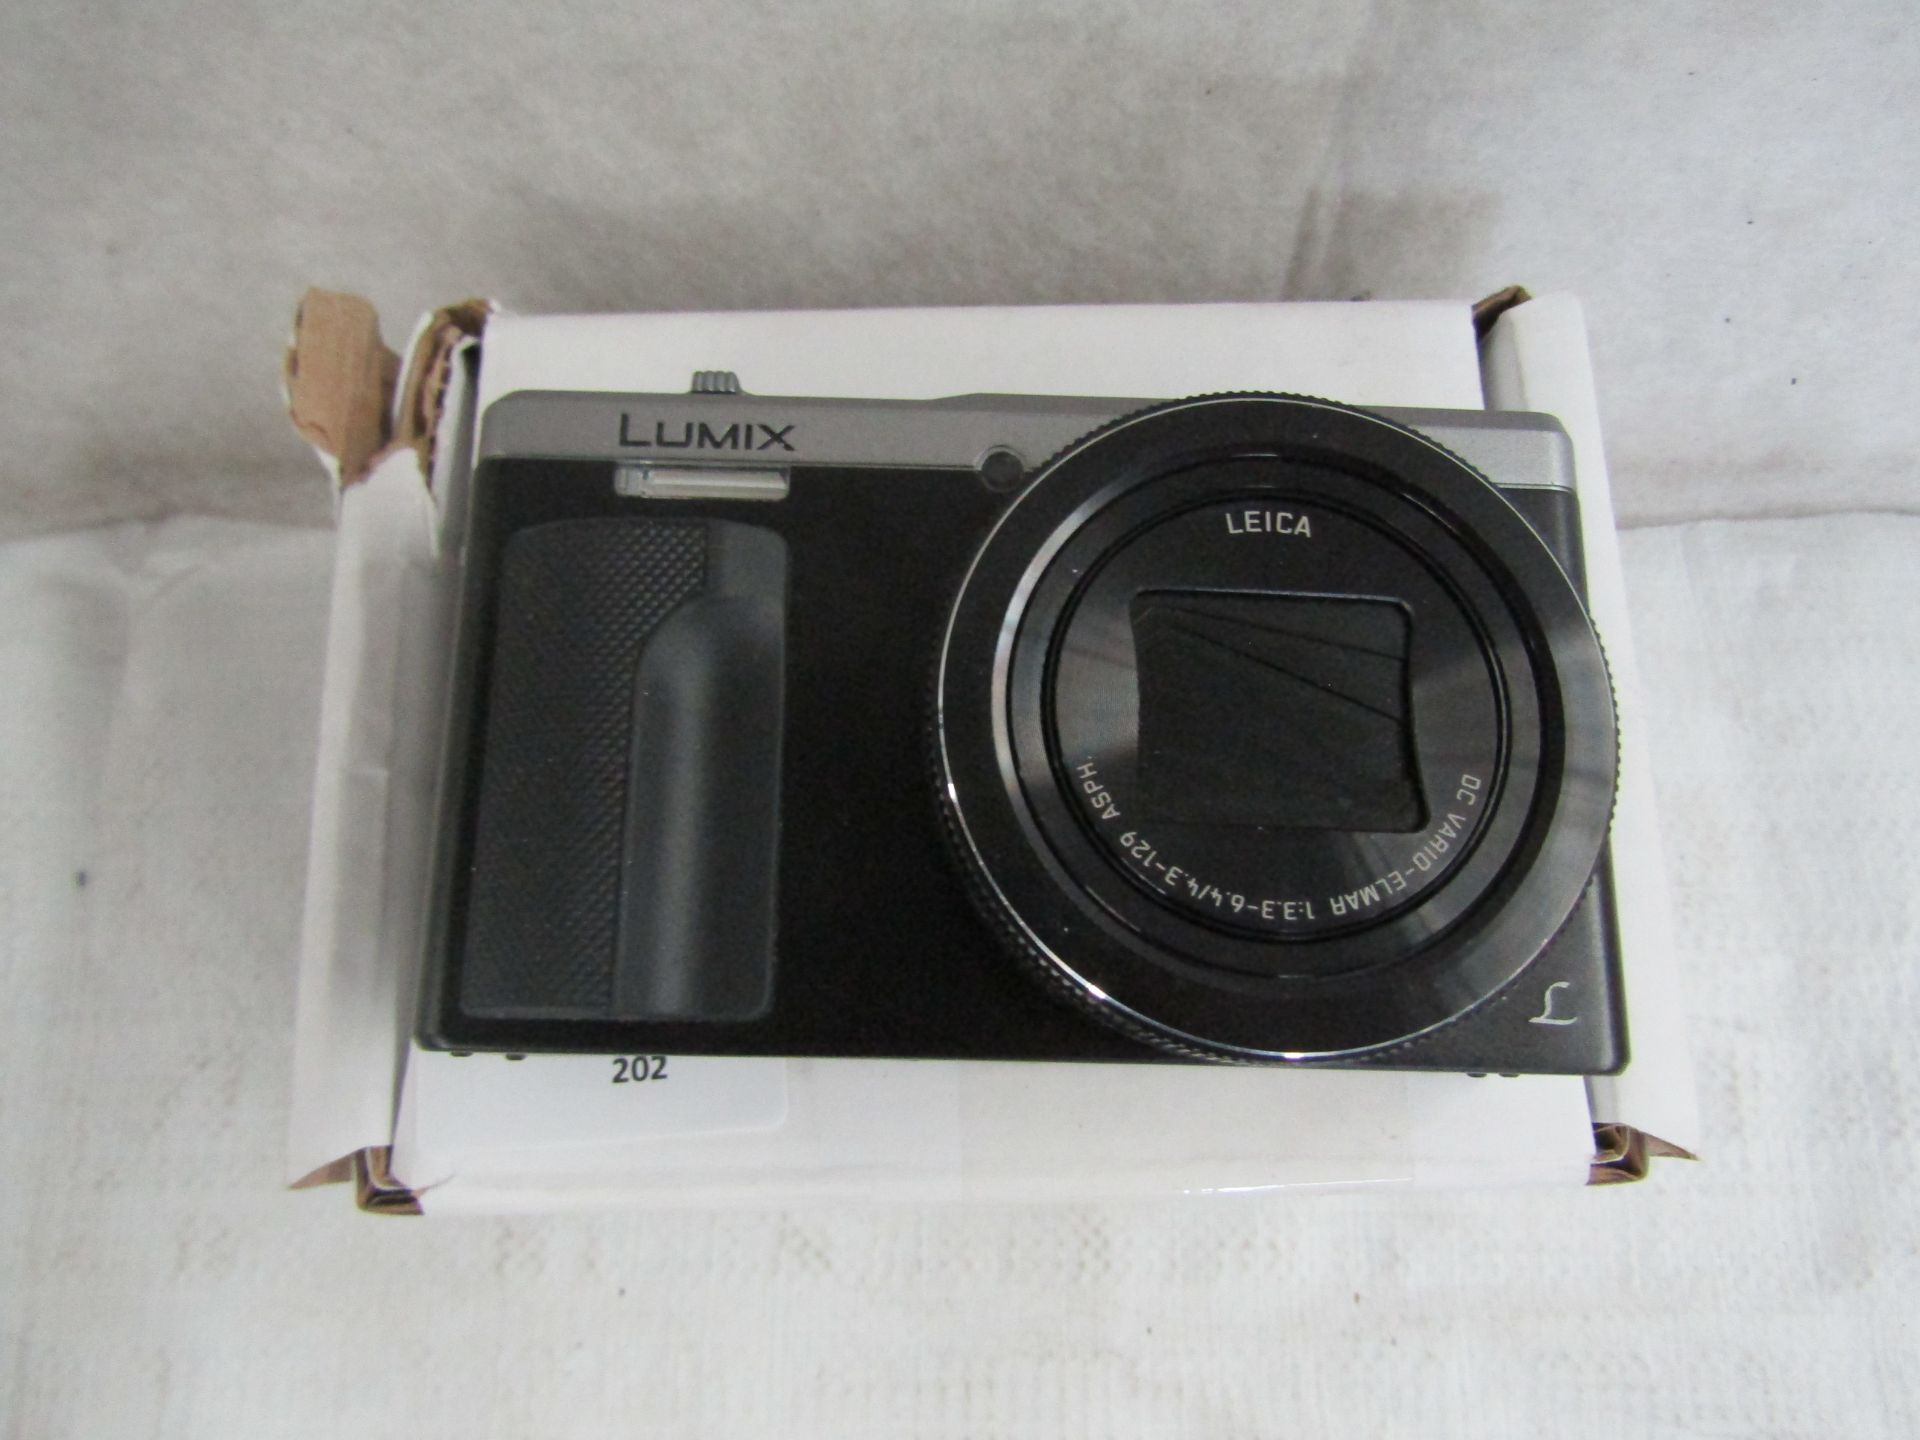 Panasonic Lumix Camera, Model DMC-TZ80, Unchecked & Boxed. RRP £180